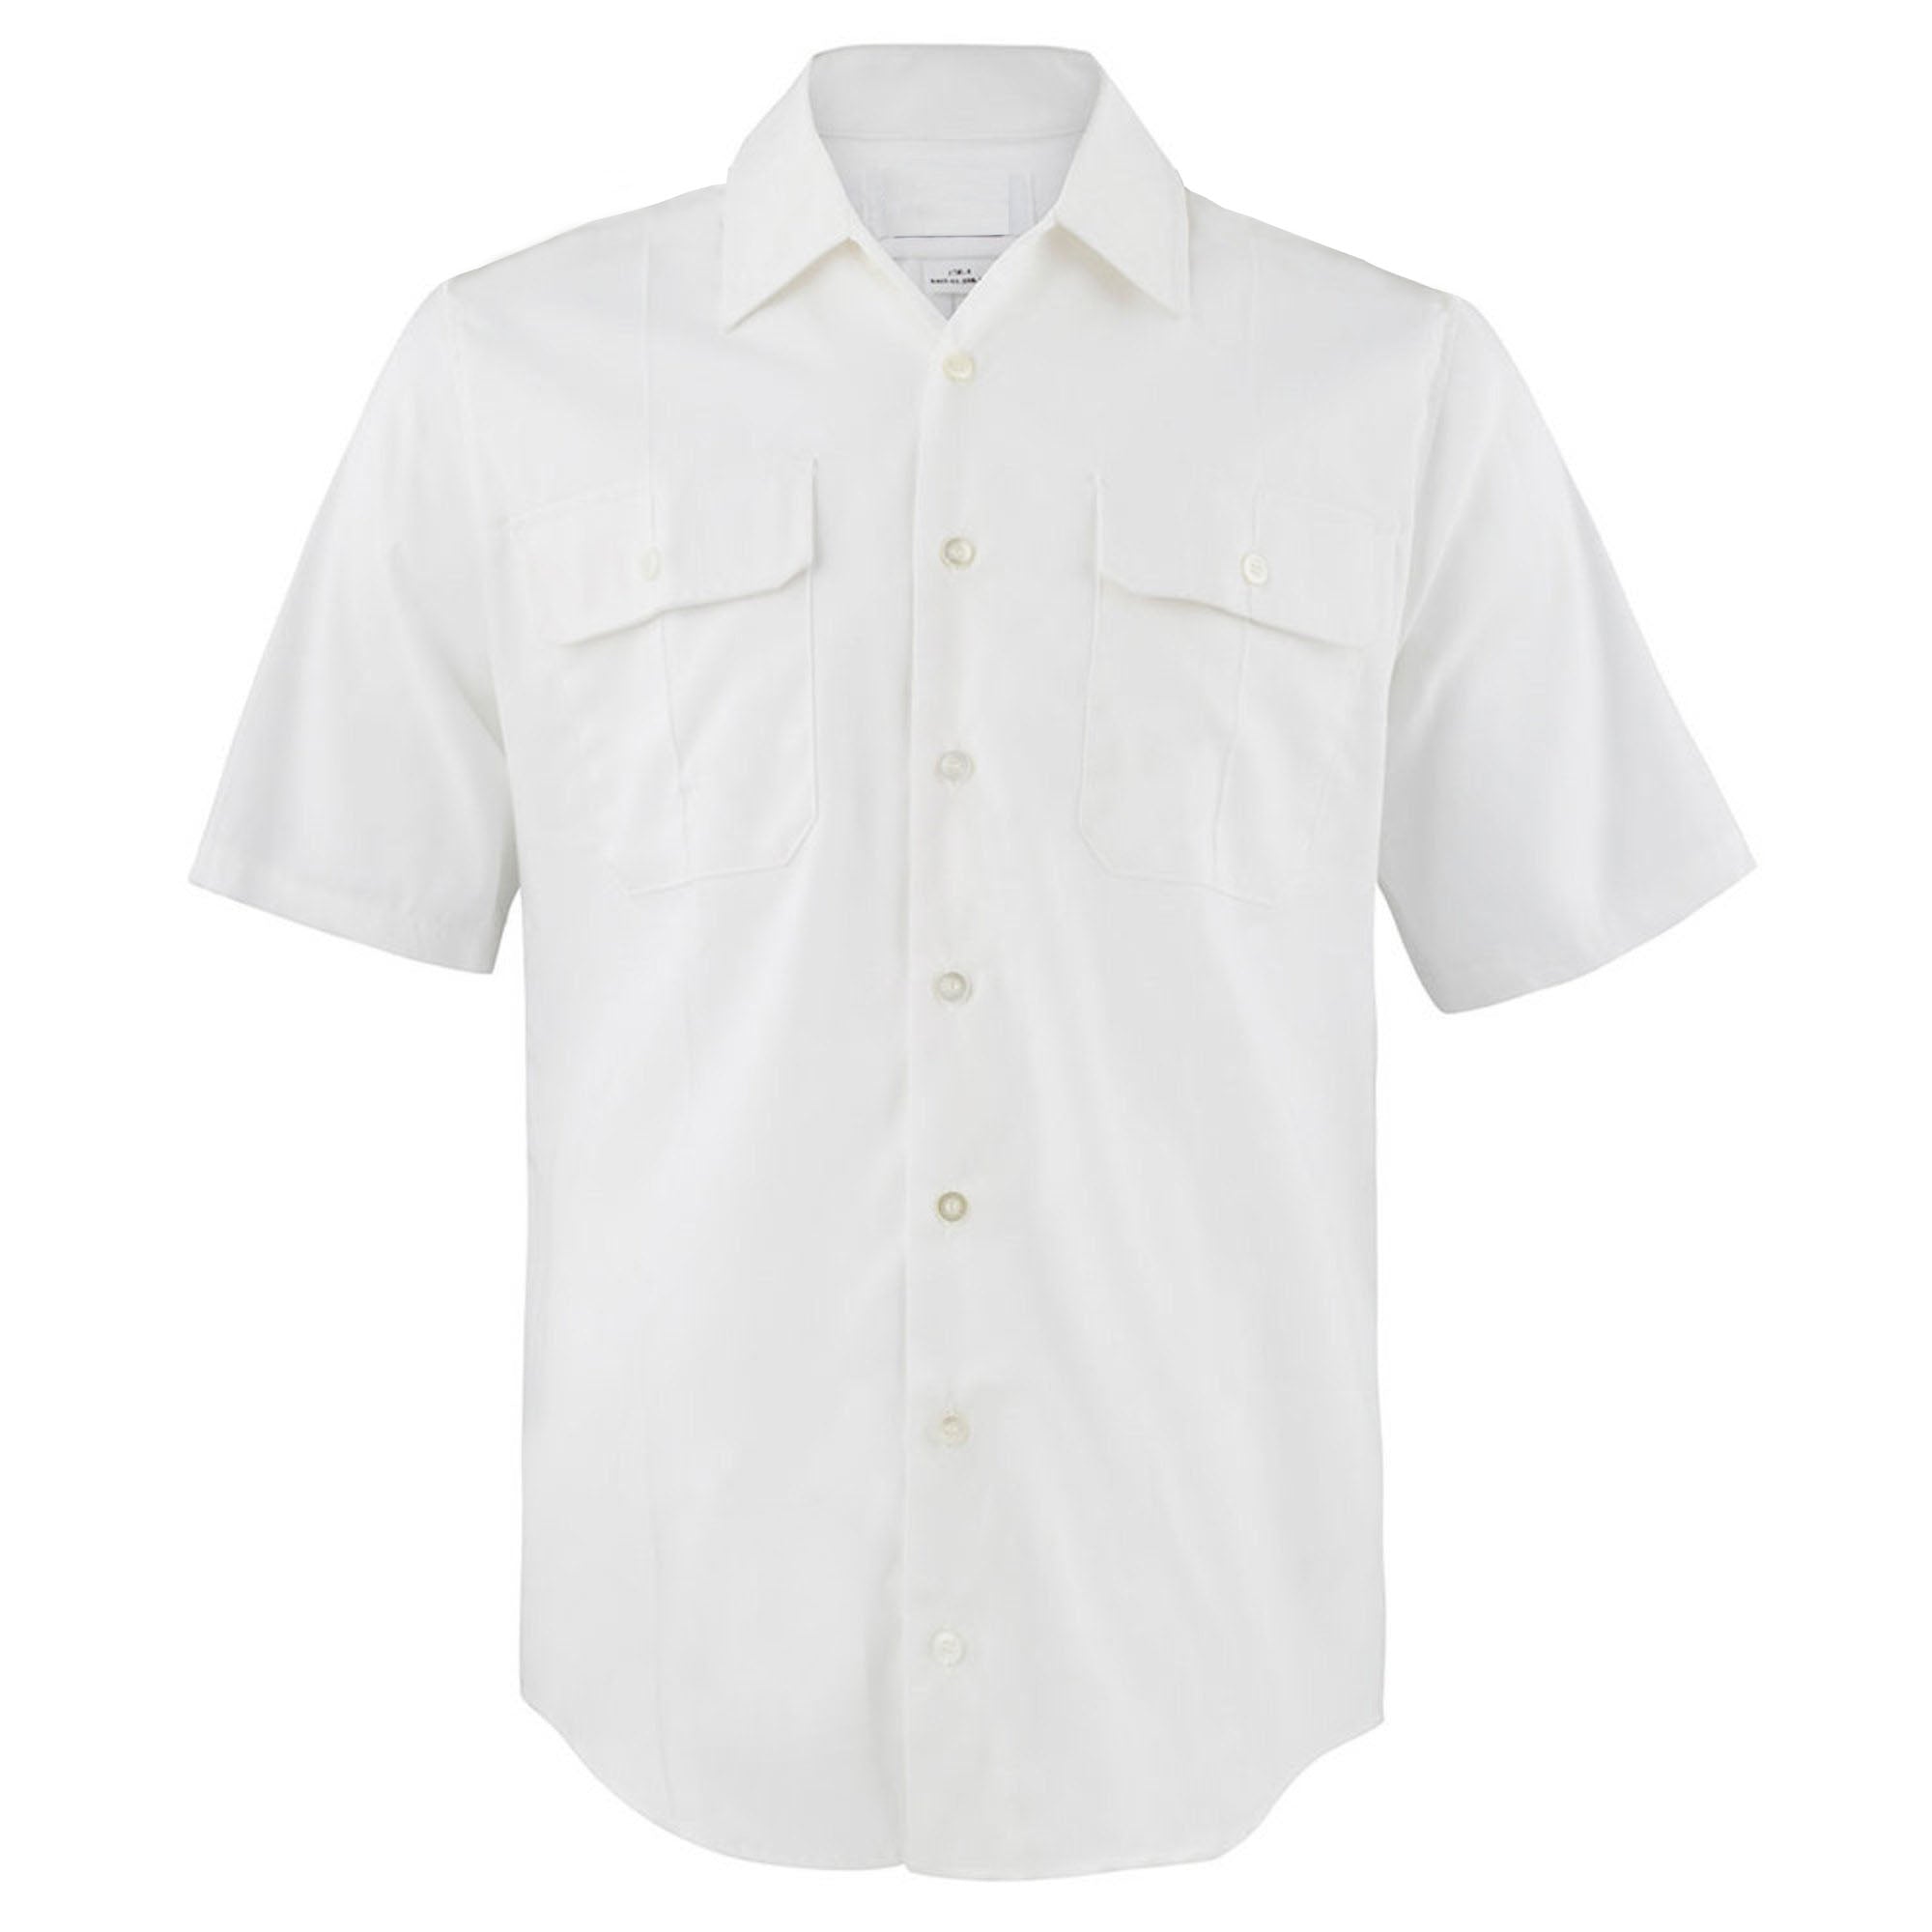 U.S. NAVY Men Tropical Summer White Cotton Poplin Shirt Naval Uniform ...